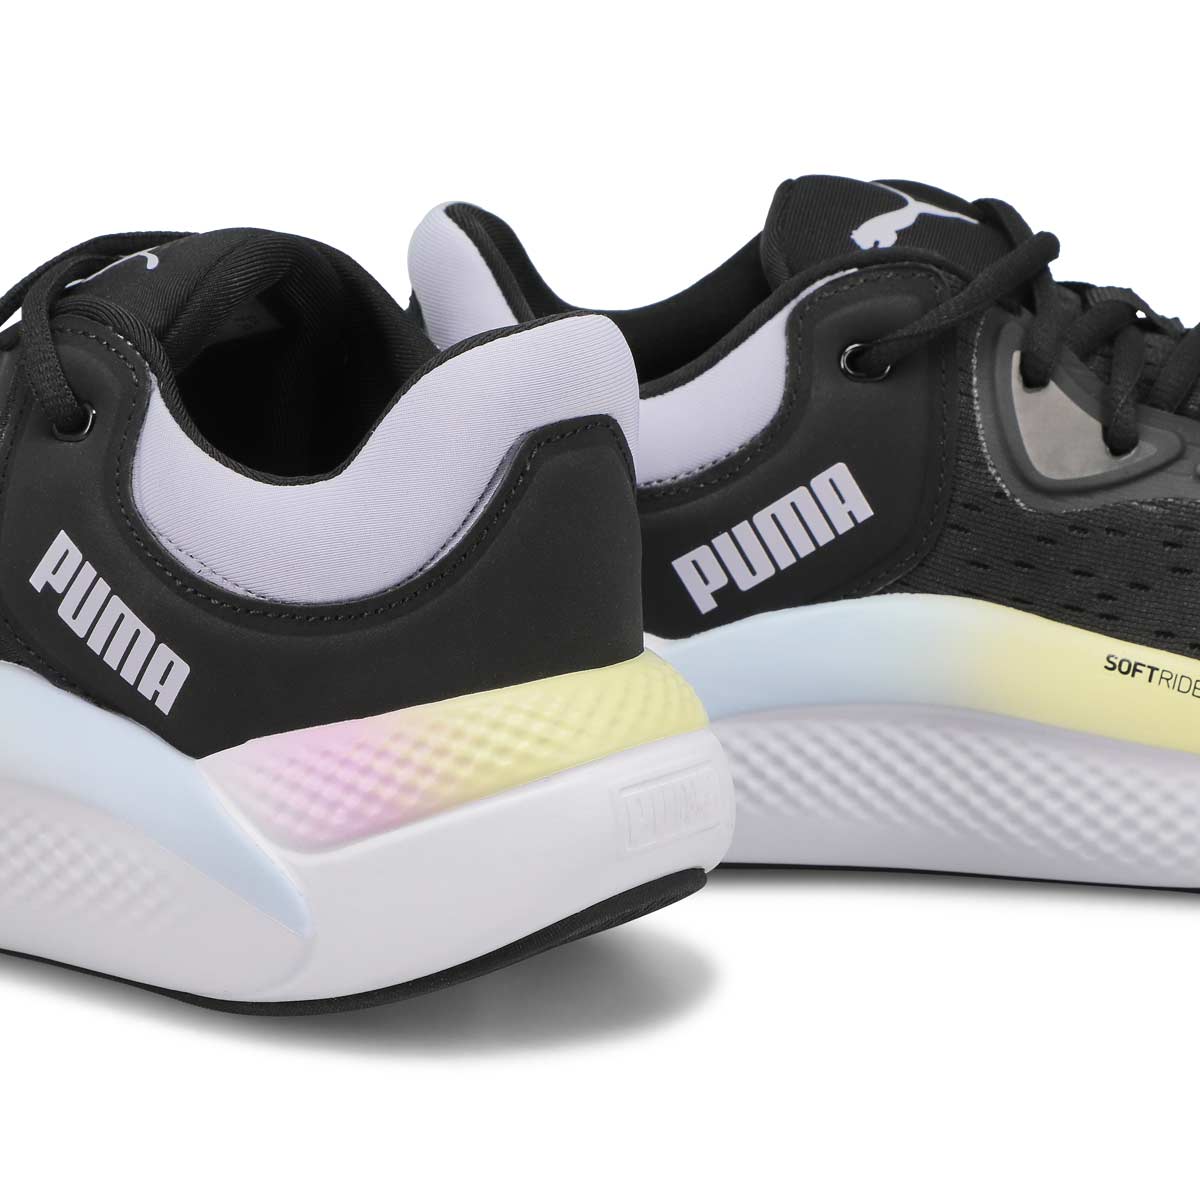 Women's Softride Pro Nova Shine Sneaker - Black/Lavender/White